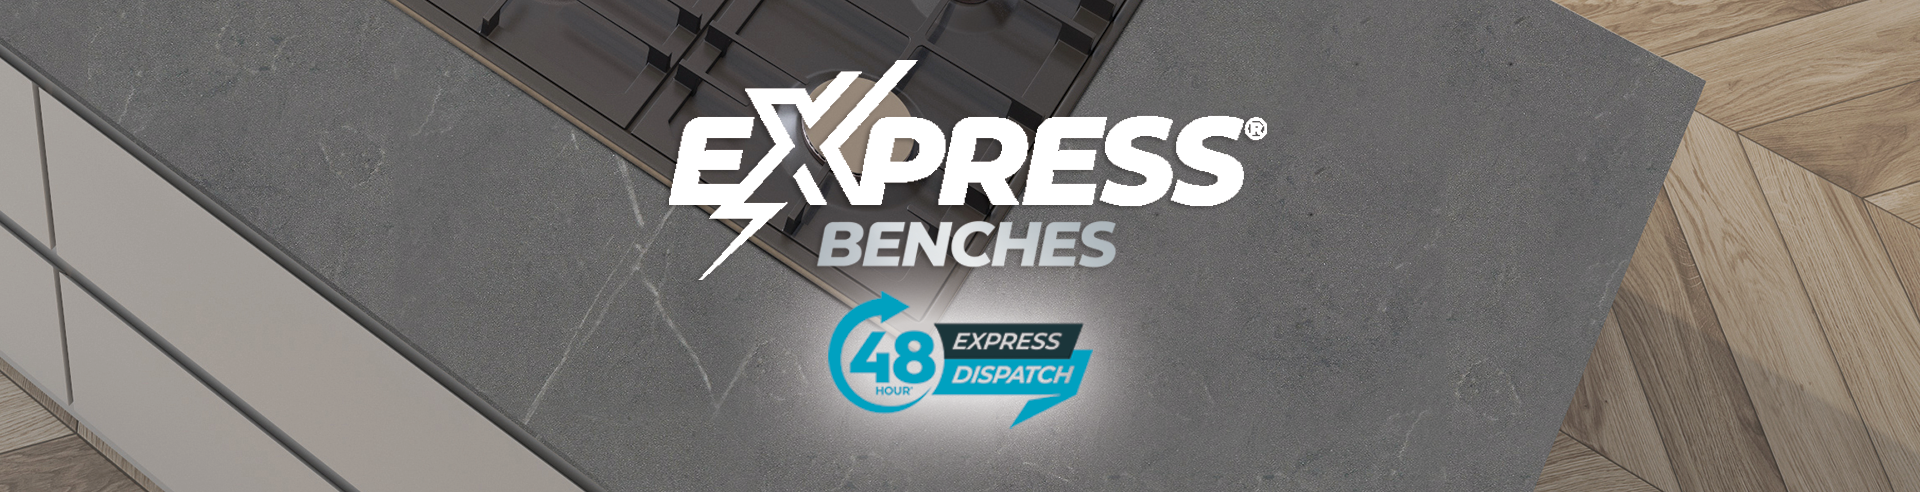 Express Benches header 1920x492px Express Dispatch.png